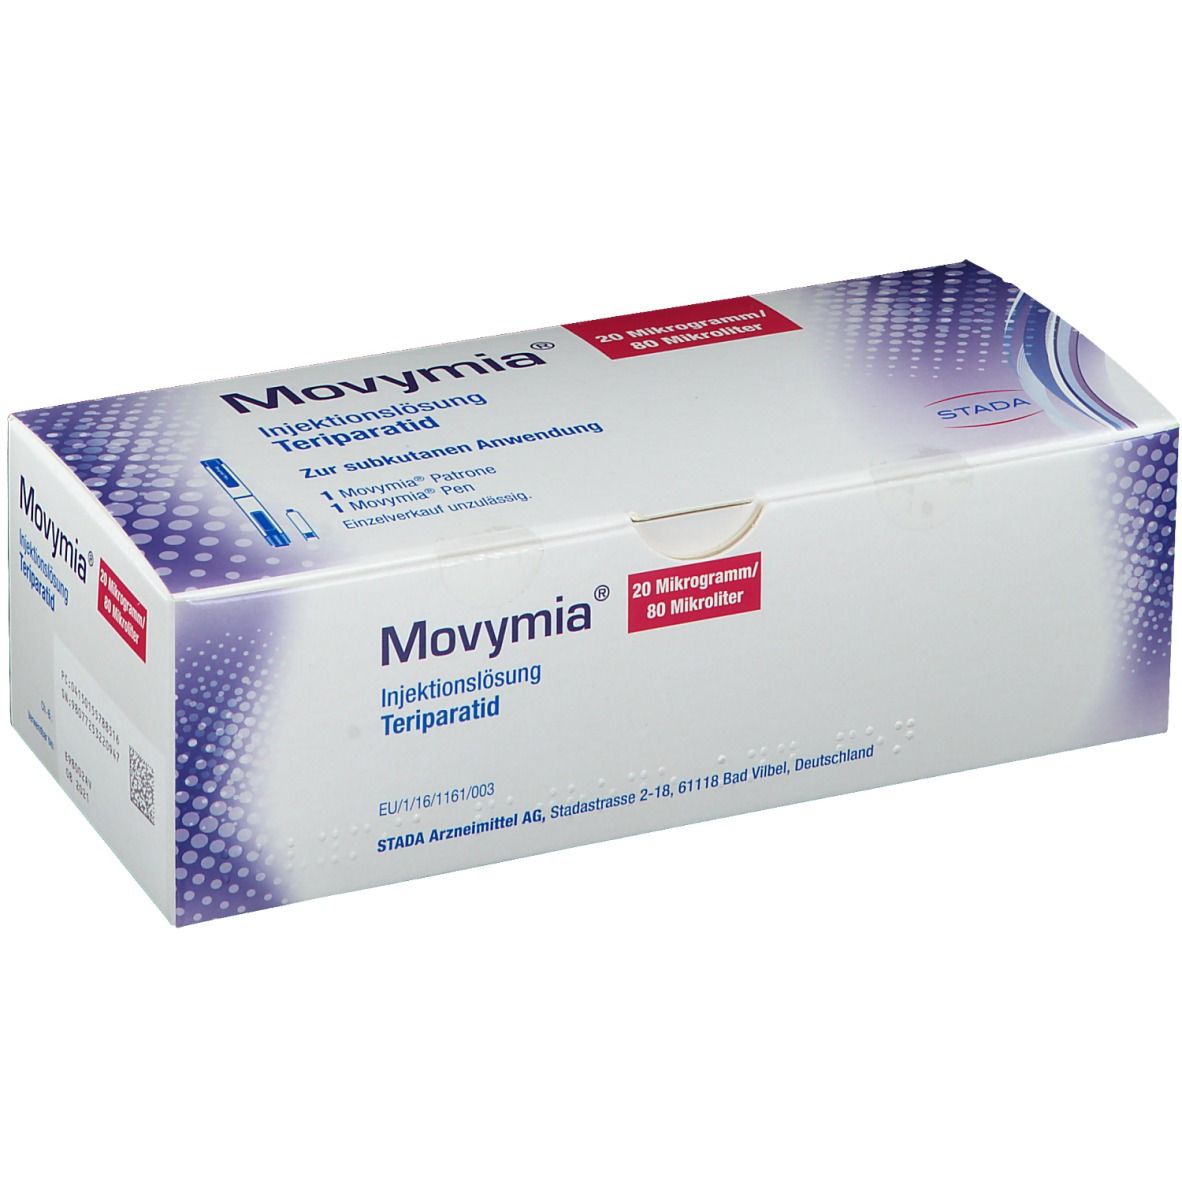 Movymia® Pen und 20 µg/80 µl Injektionslösung